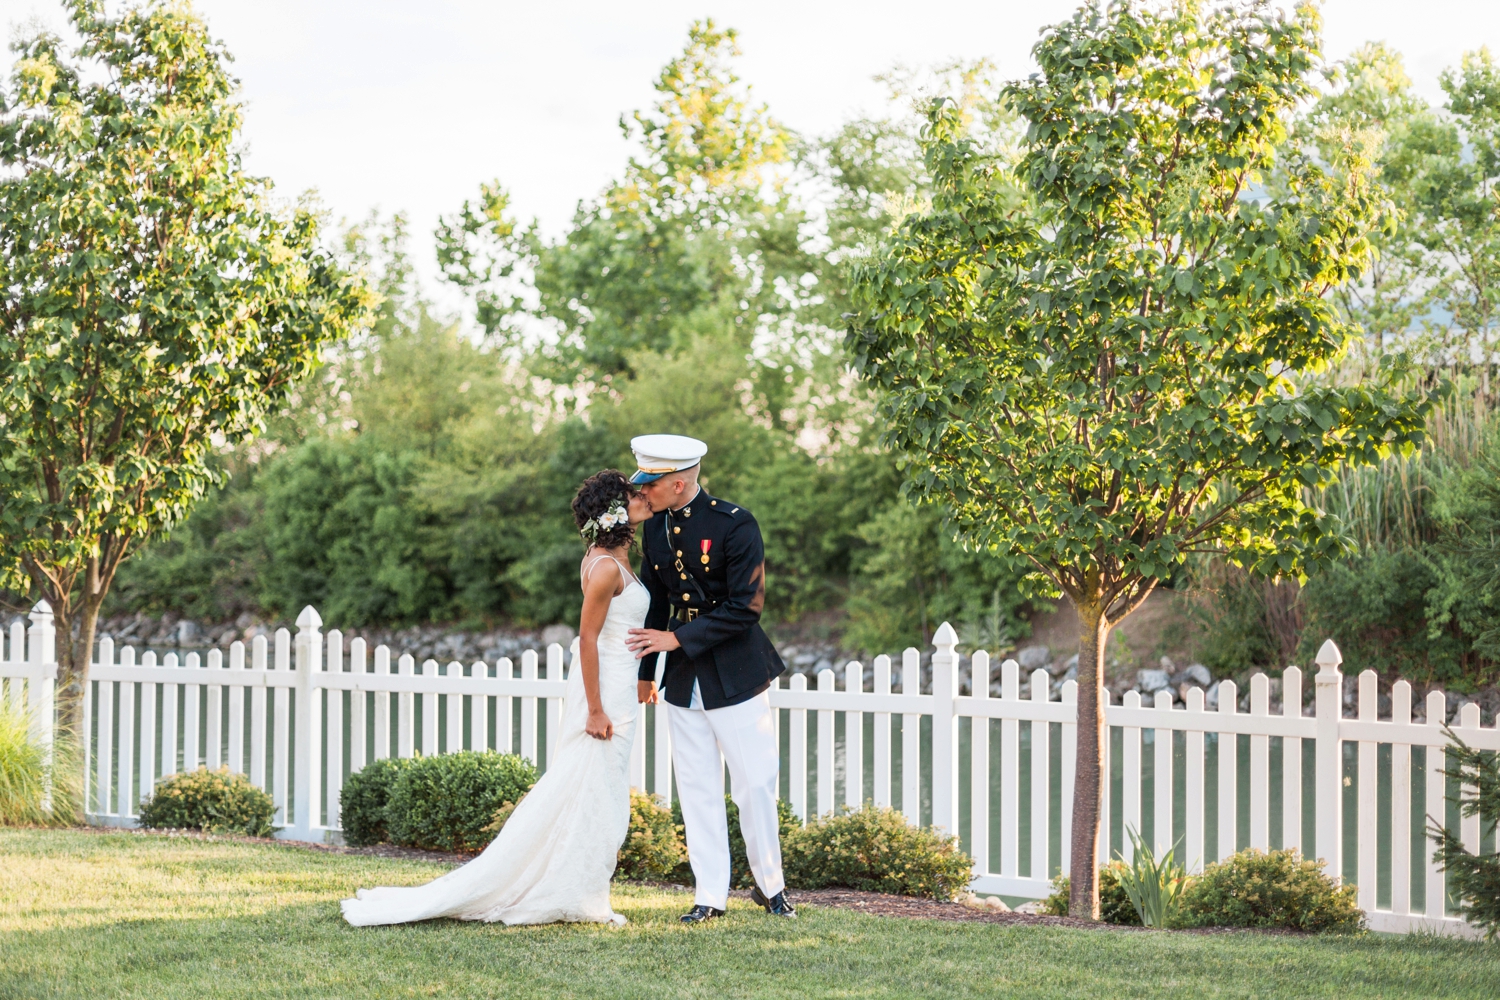 Wedding-at-The-Savannah-Center-West-Chester-Ohio-Photography-Chloe-Luka-Photography_7530.jpg